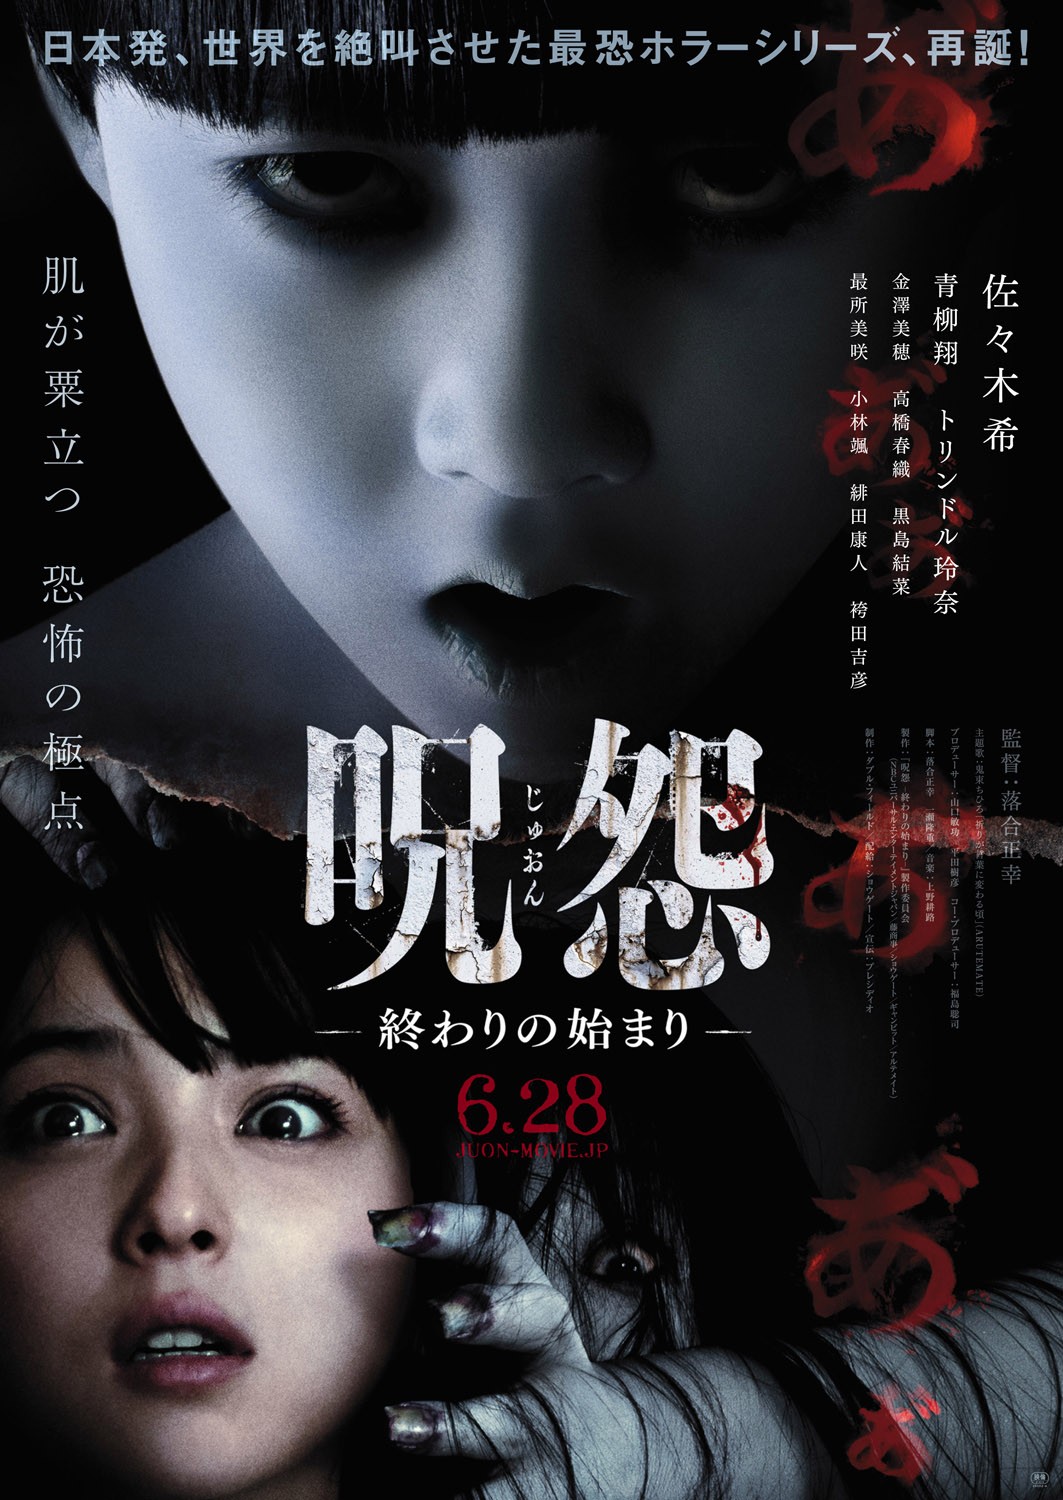 Extra Large Movie Poster Image for Ju-on: Owari no hajimari (#3 of 3)